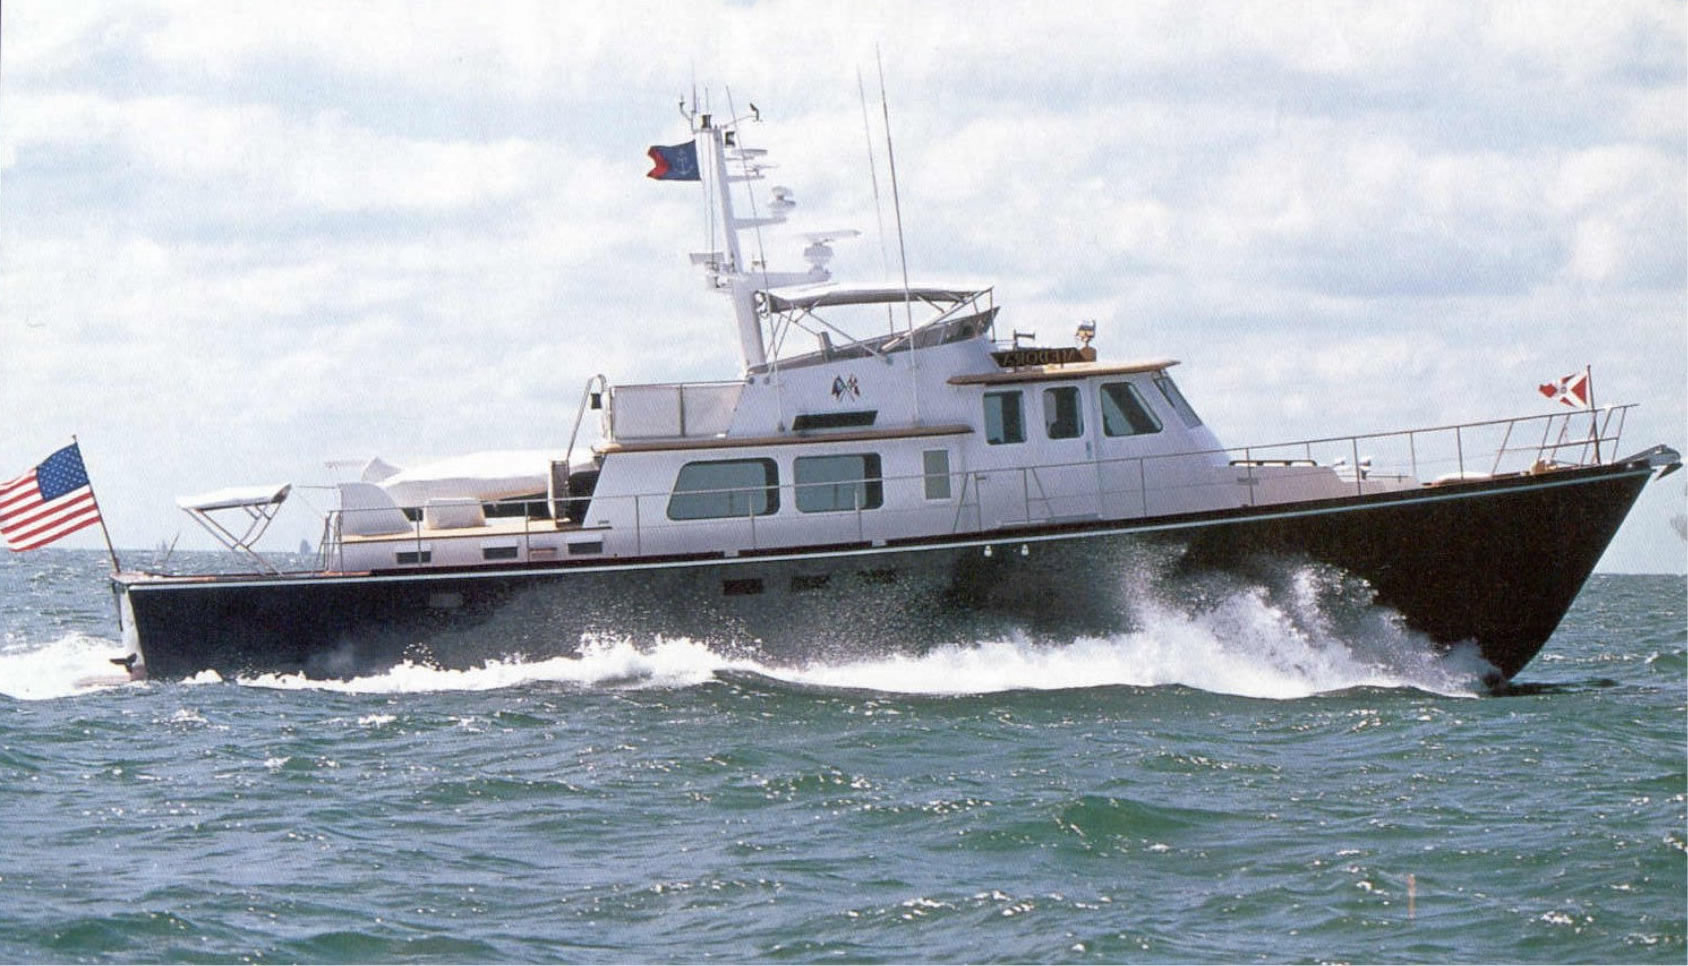 Ray Hunt Design 72' Aft Cabin Motor Yacht